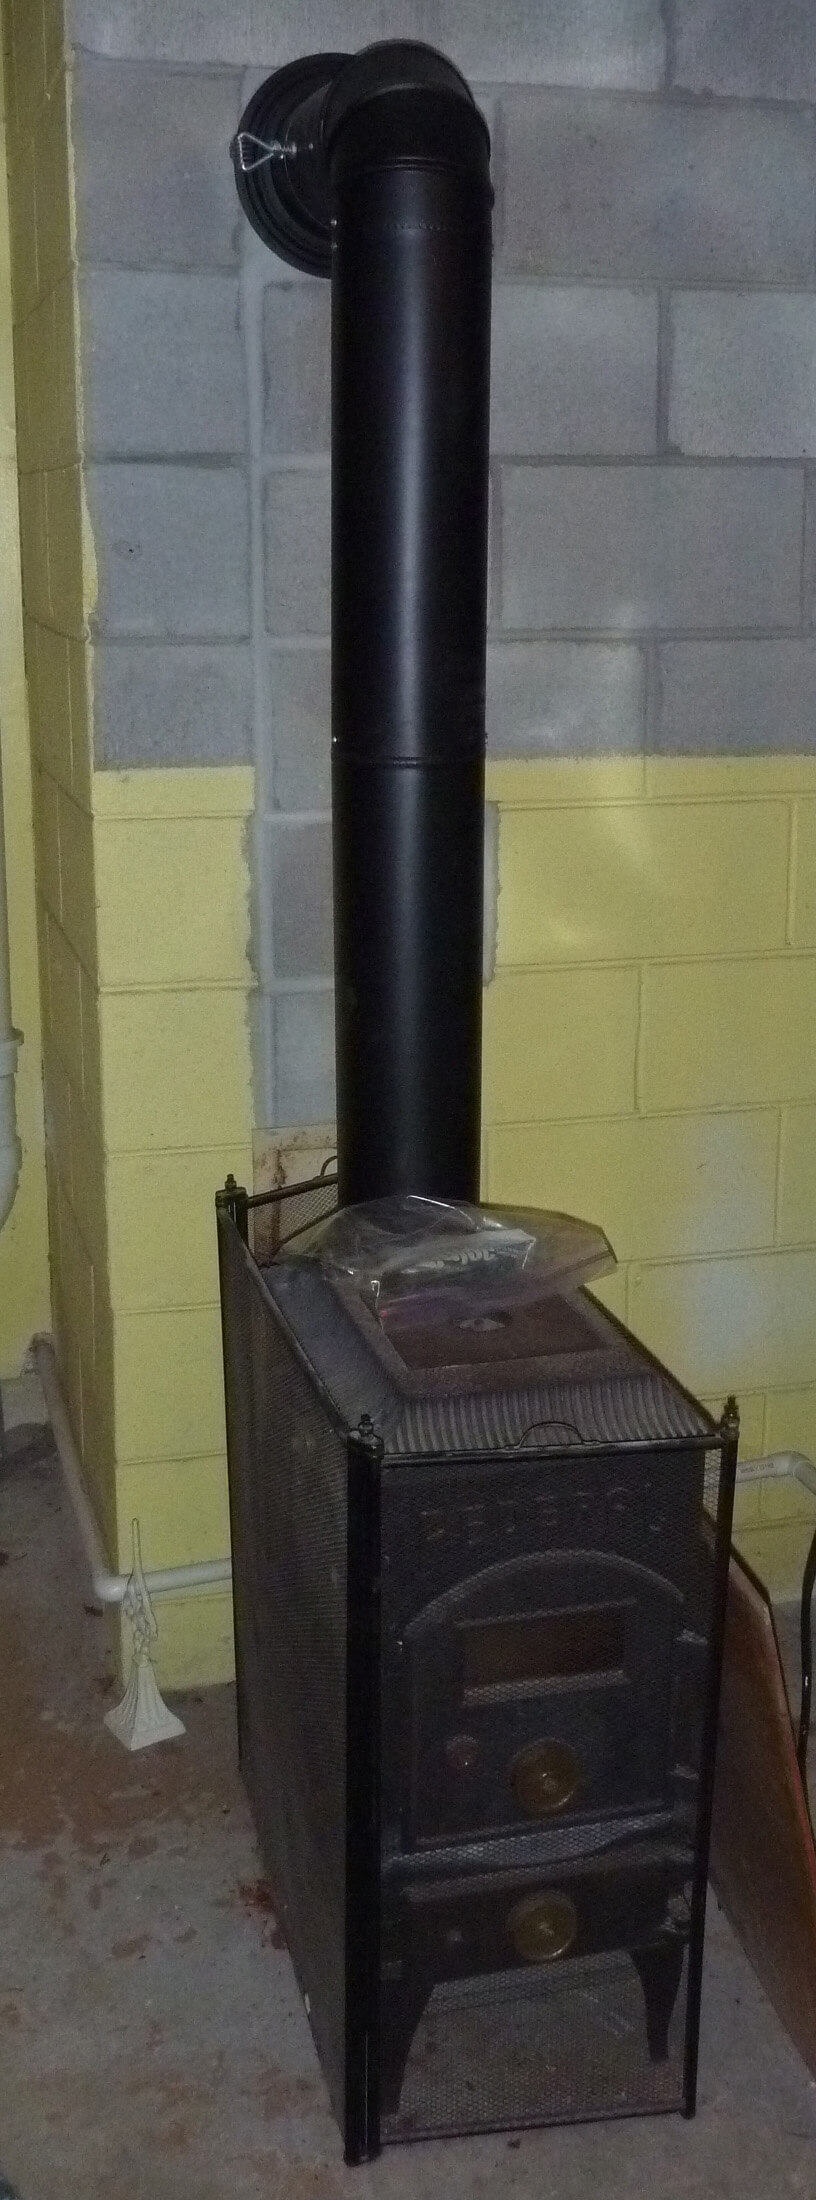 franklin wood stove